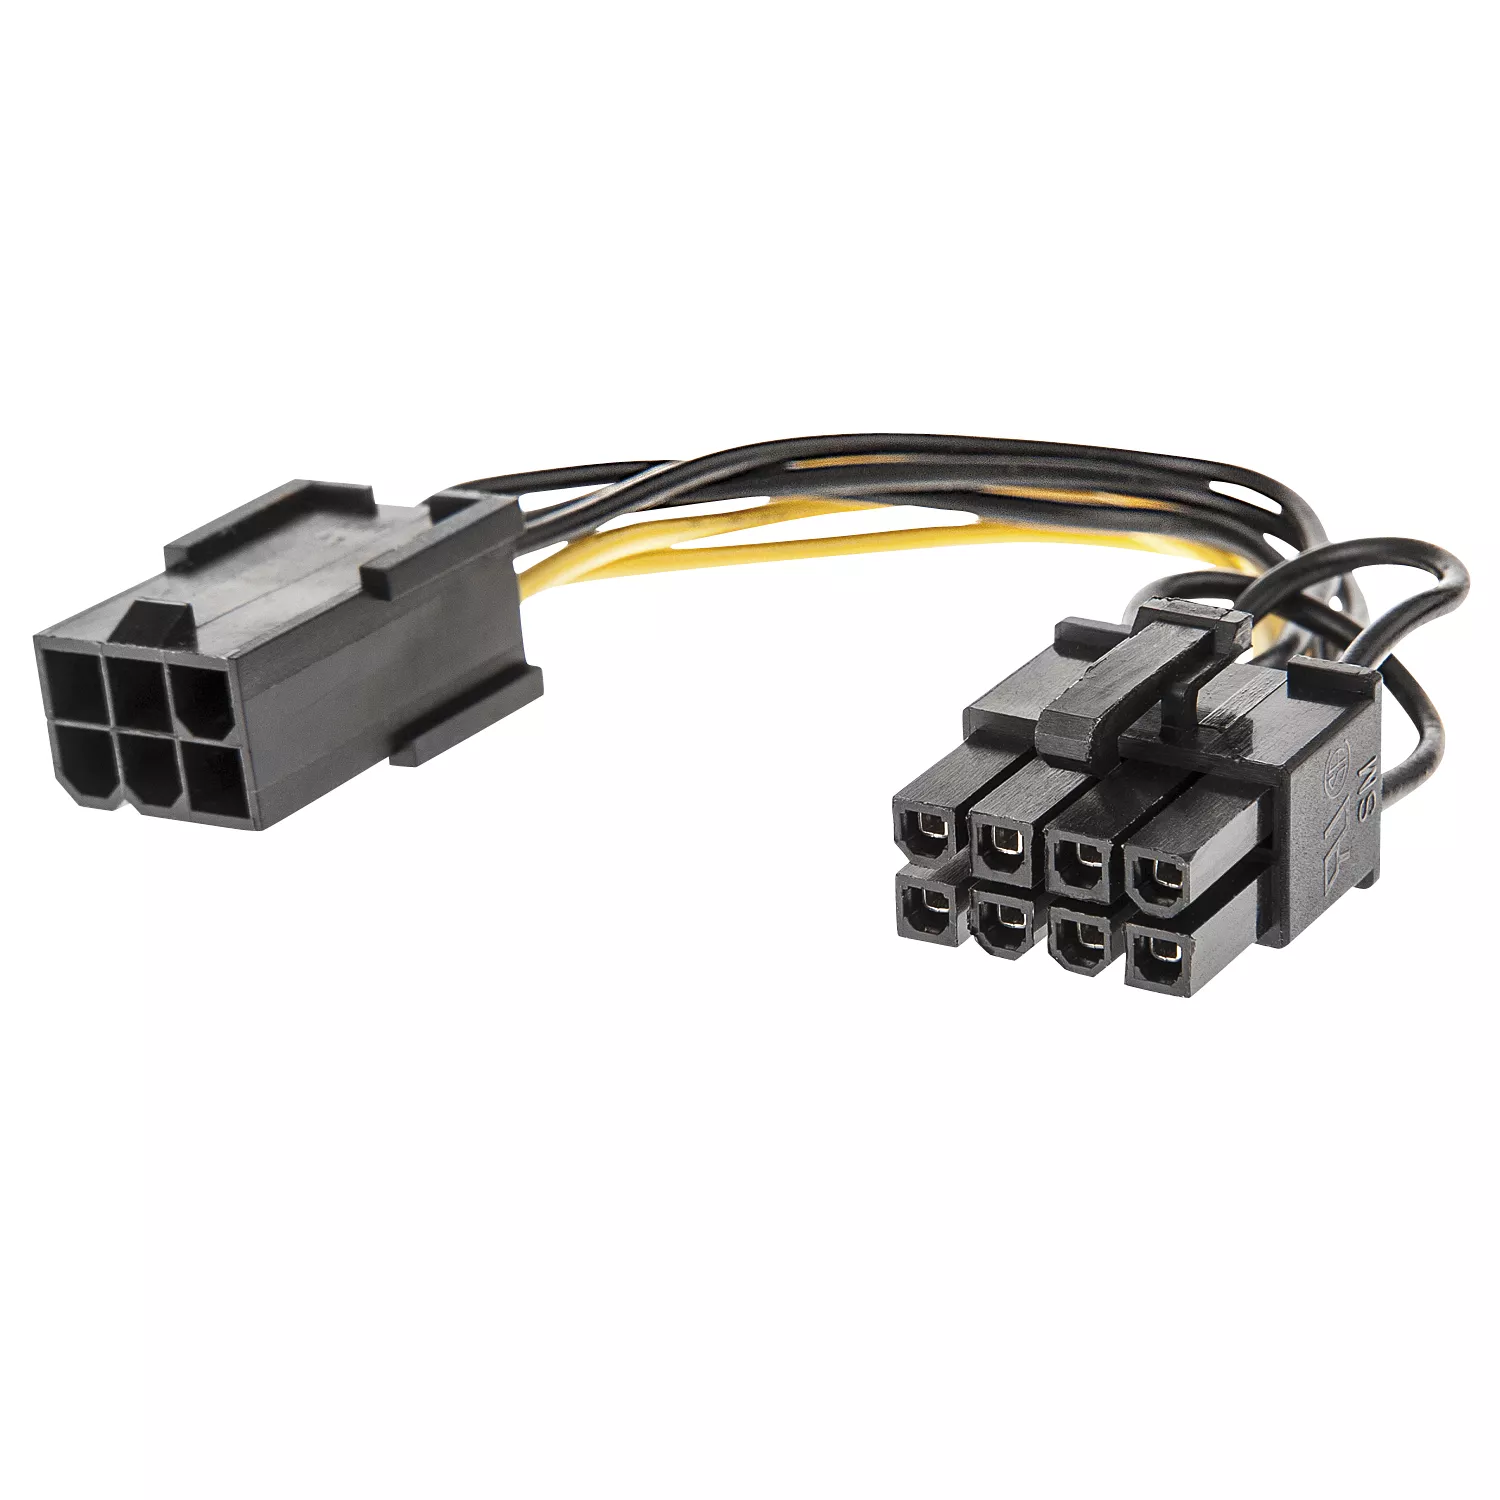 Revendeur officiel Accessoire composant LINDY 2x 6 pin F to 6 pin M PCIe Power Adapter Length 0